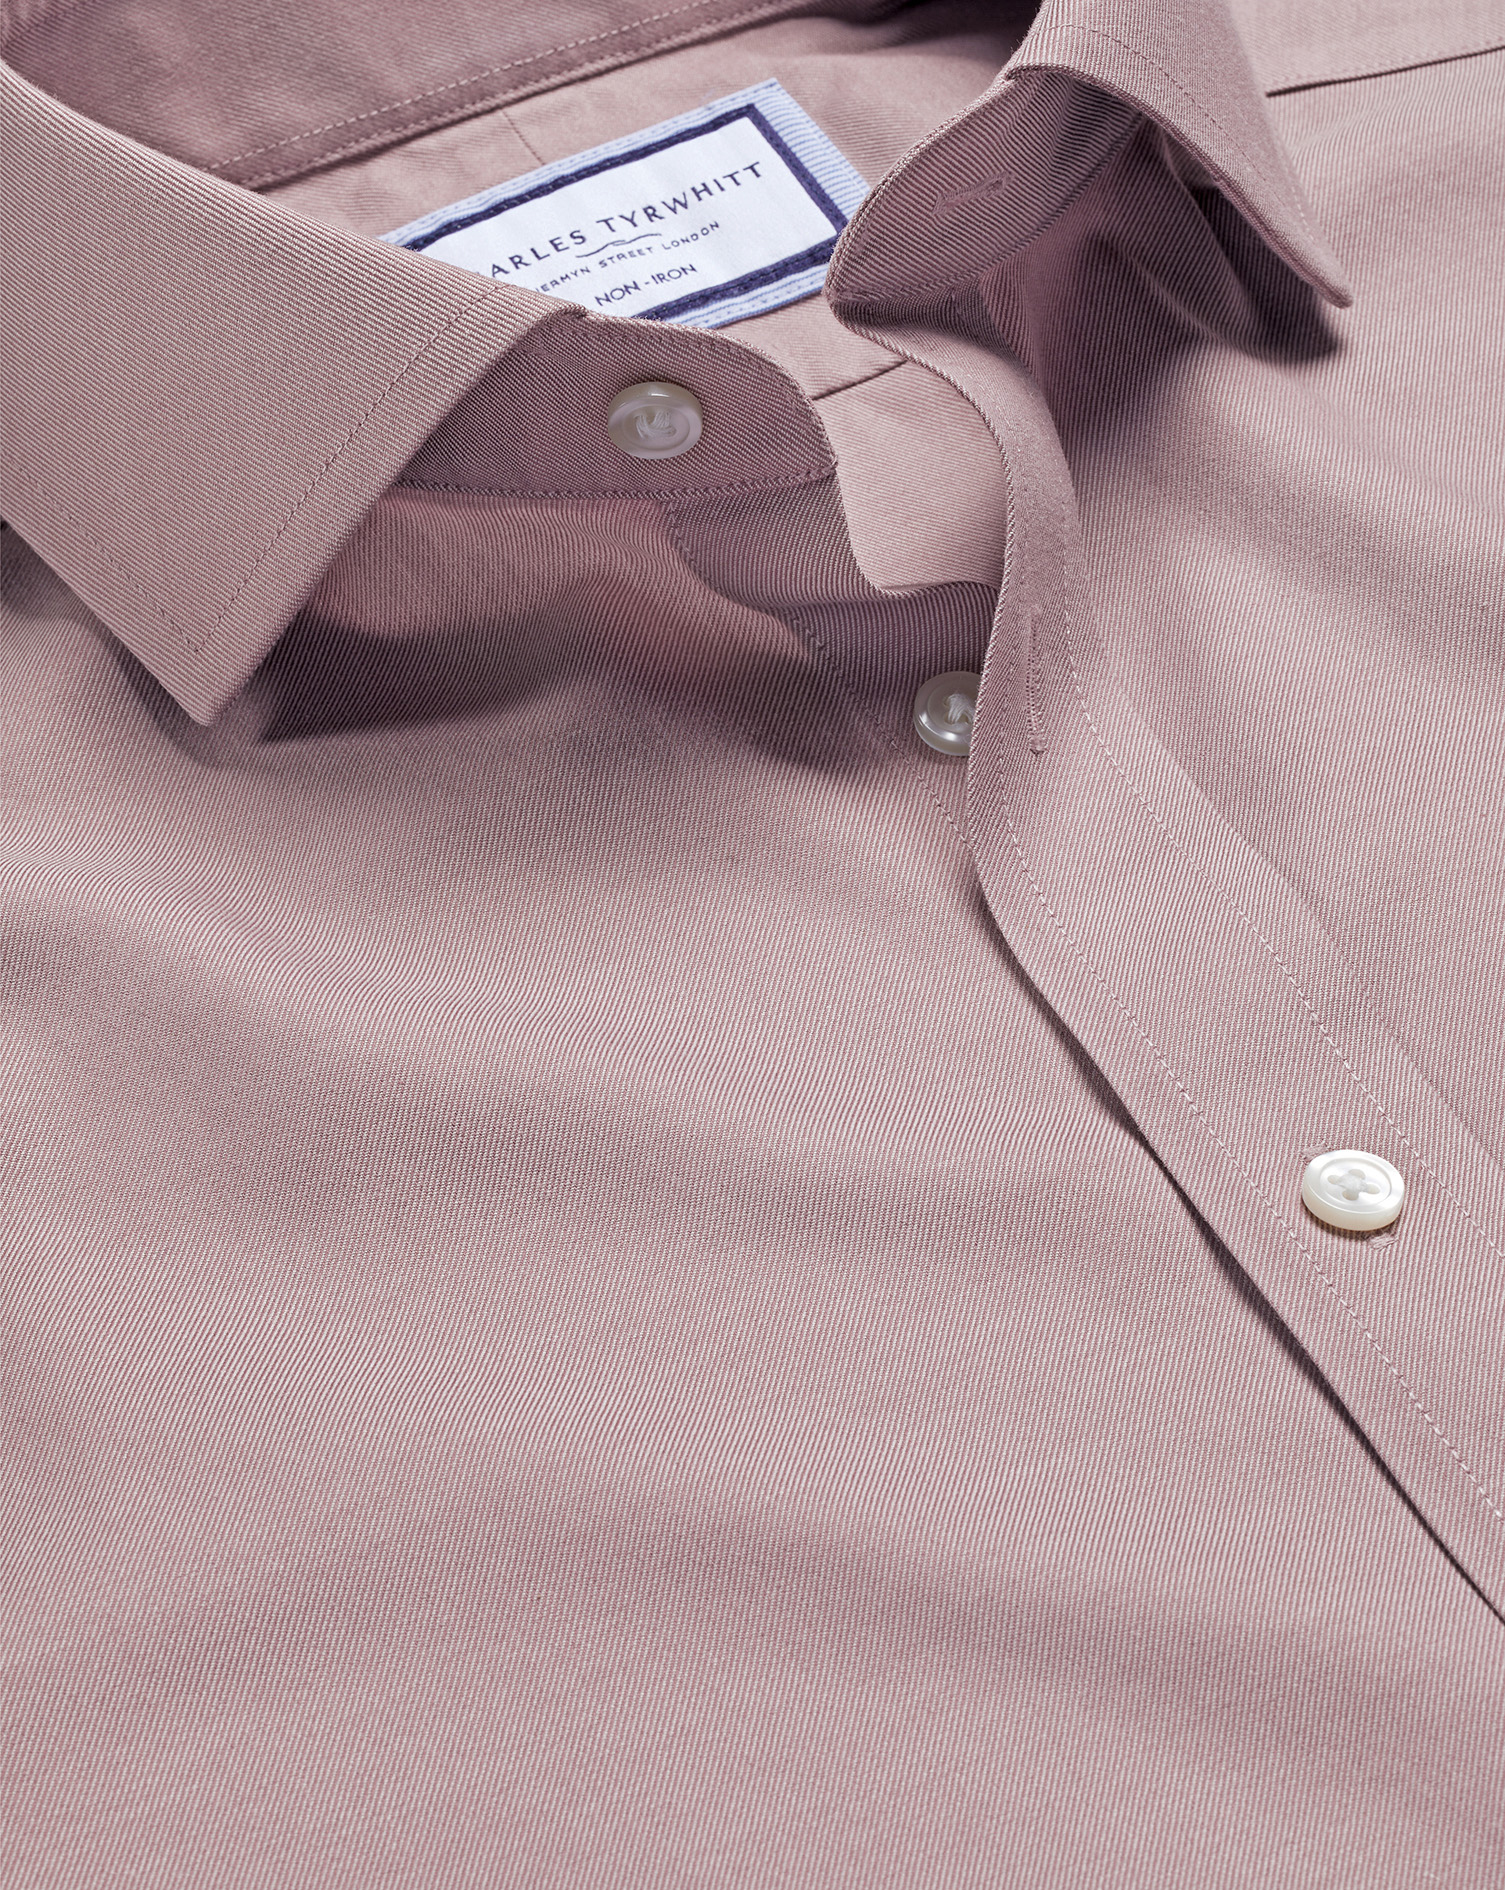 Men's Charles Tyrwhitt Cutaway Collar Non-Iron Twill Dress Shirt - Claret Pink Single Cuff Red Size 